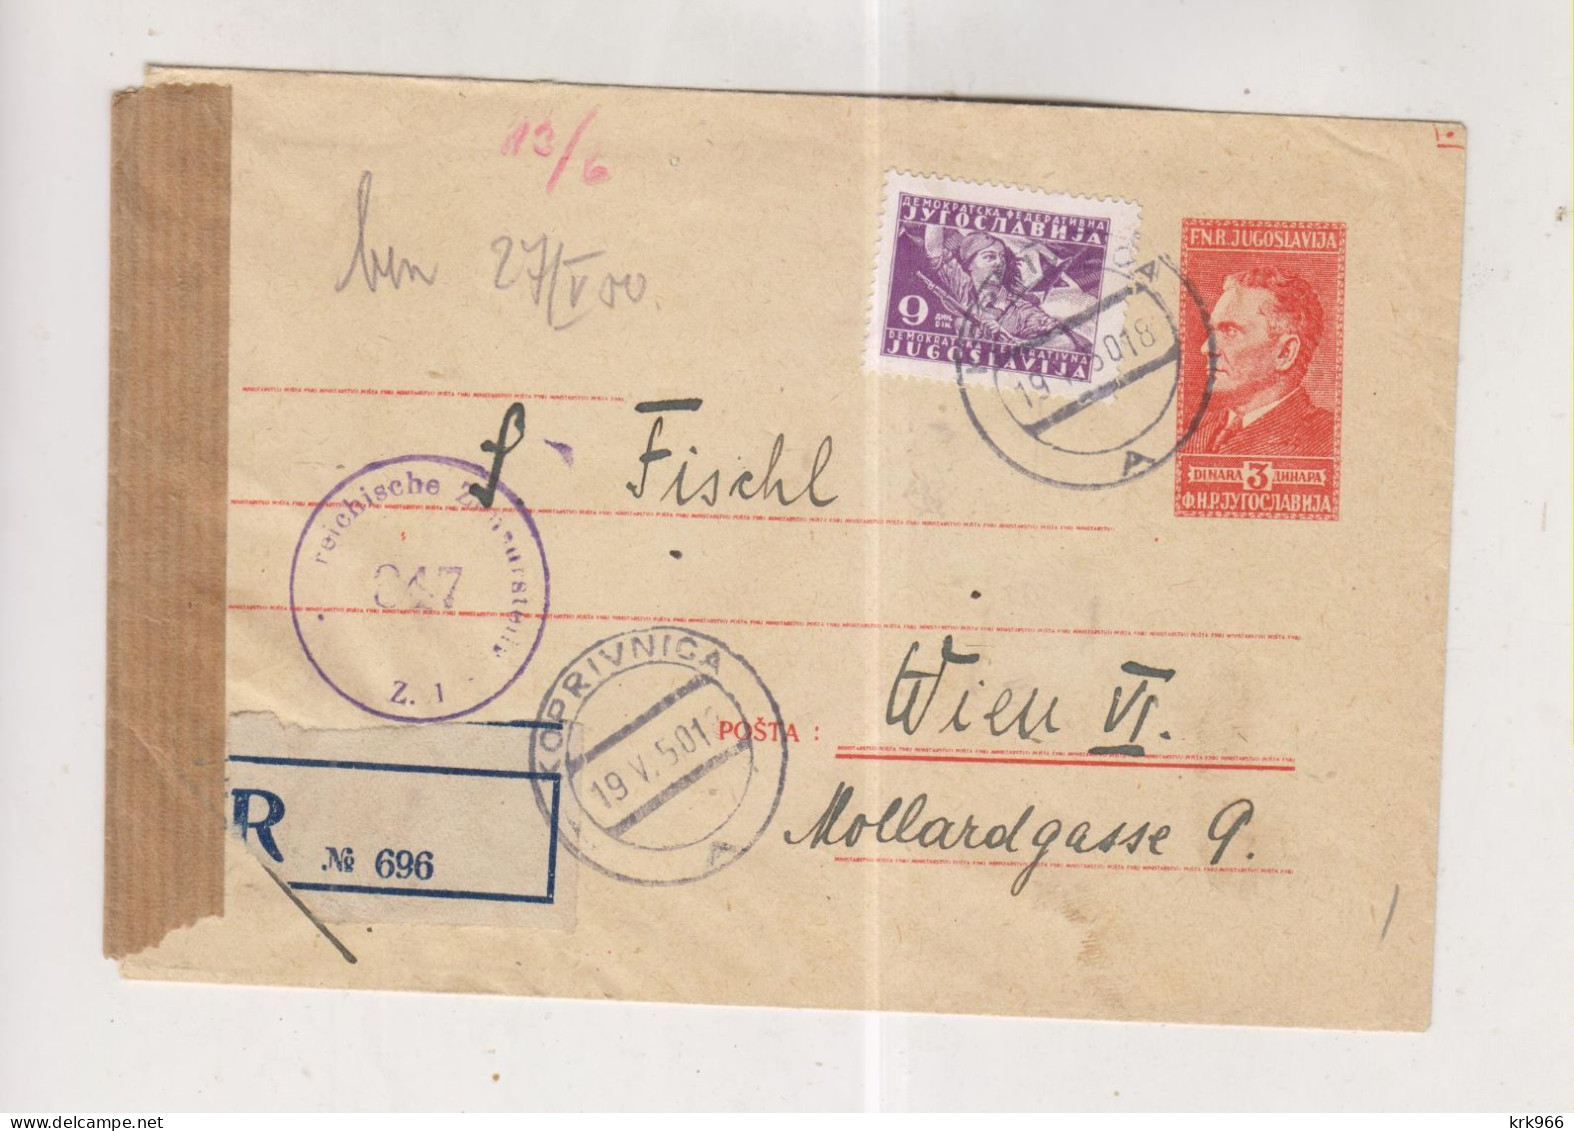 YUGOSLAVIA,1950 KOPRIVNICA Registered Censored Postal Stationery Cover To Austria - Covers & Documents